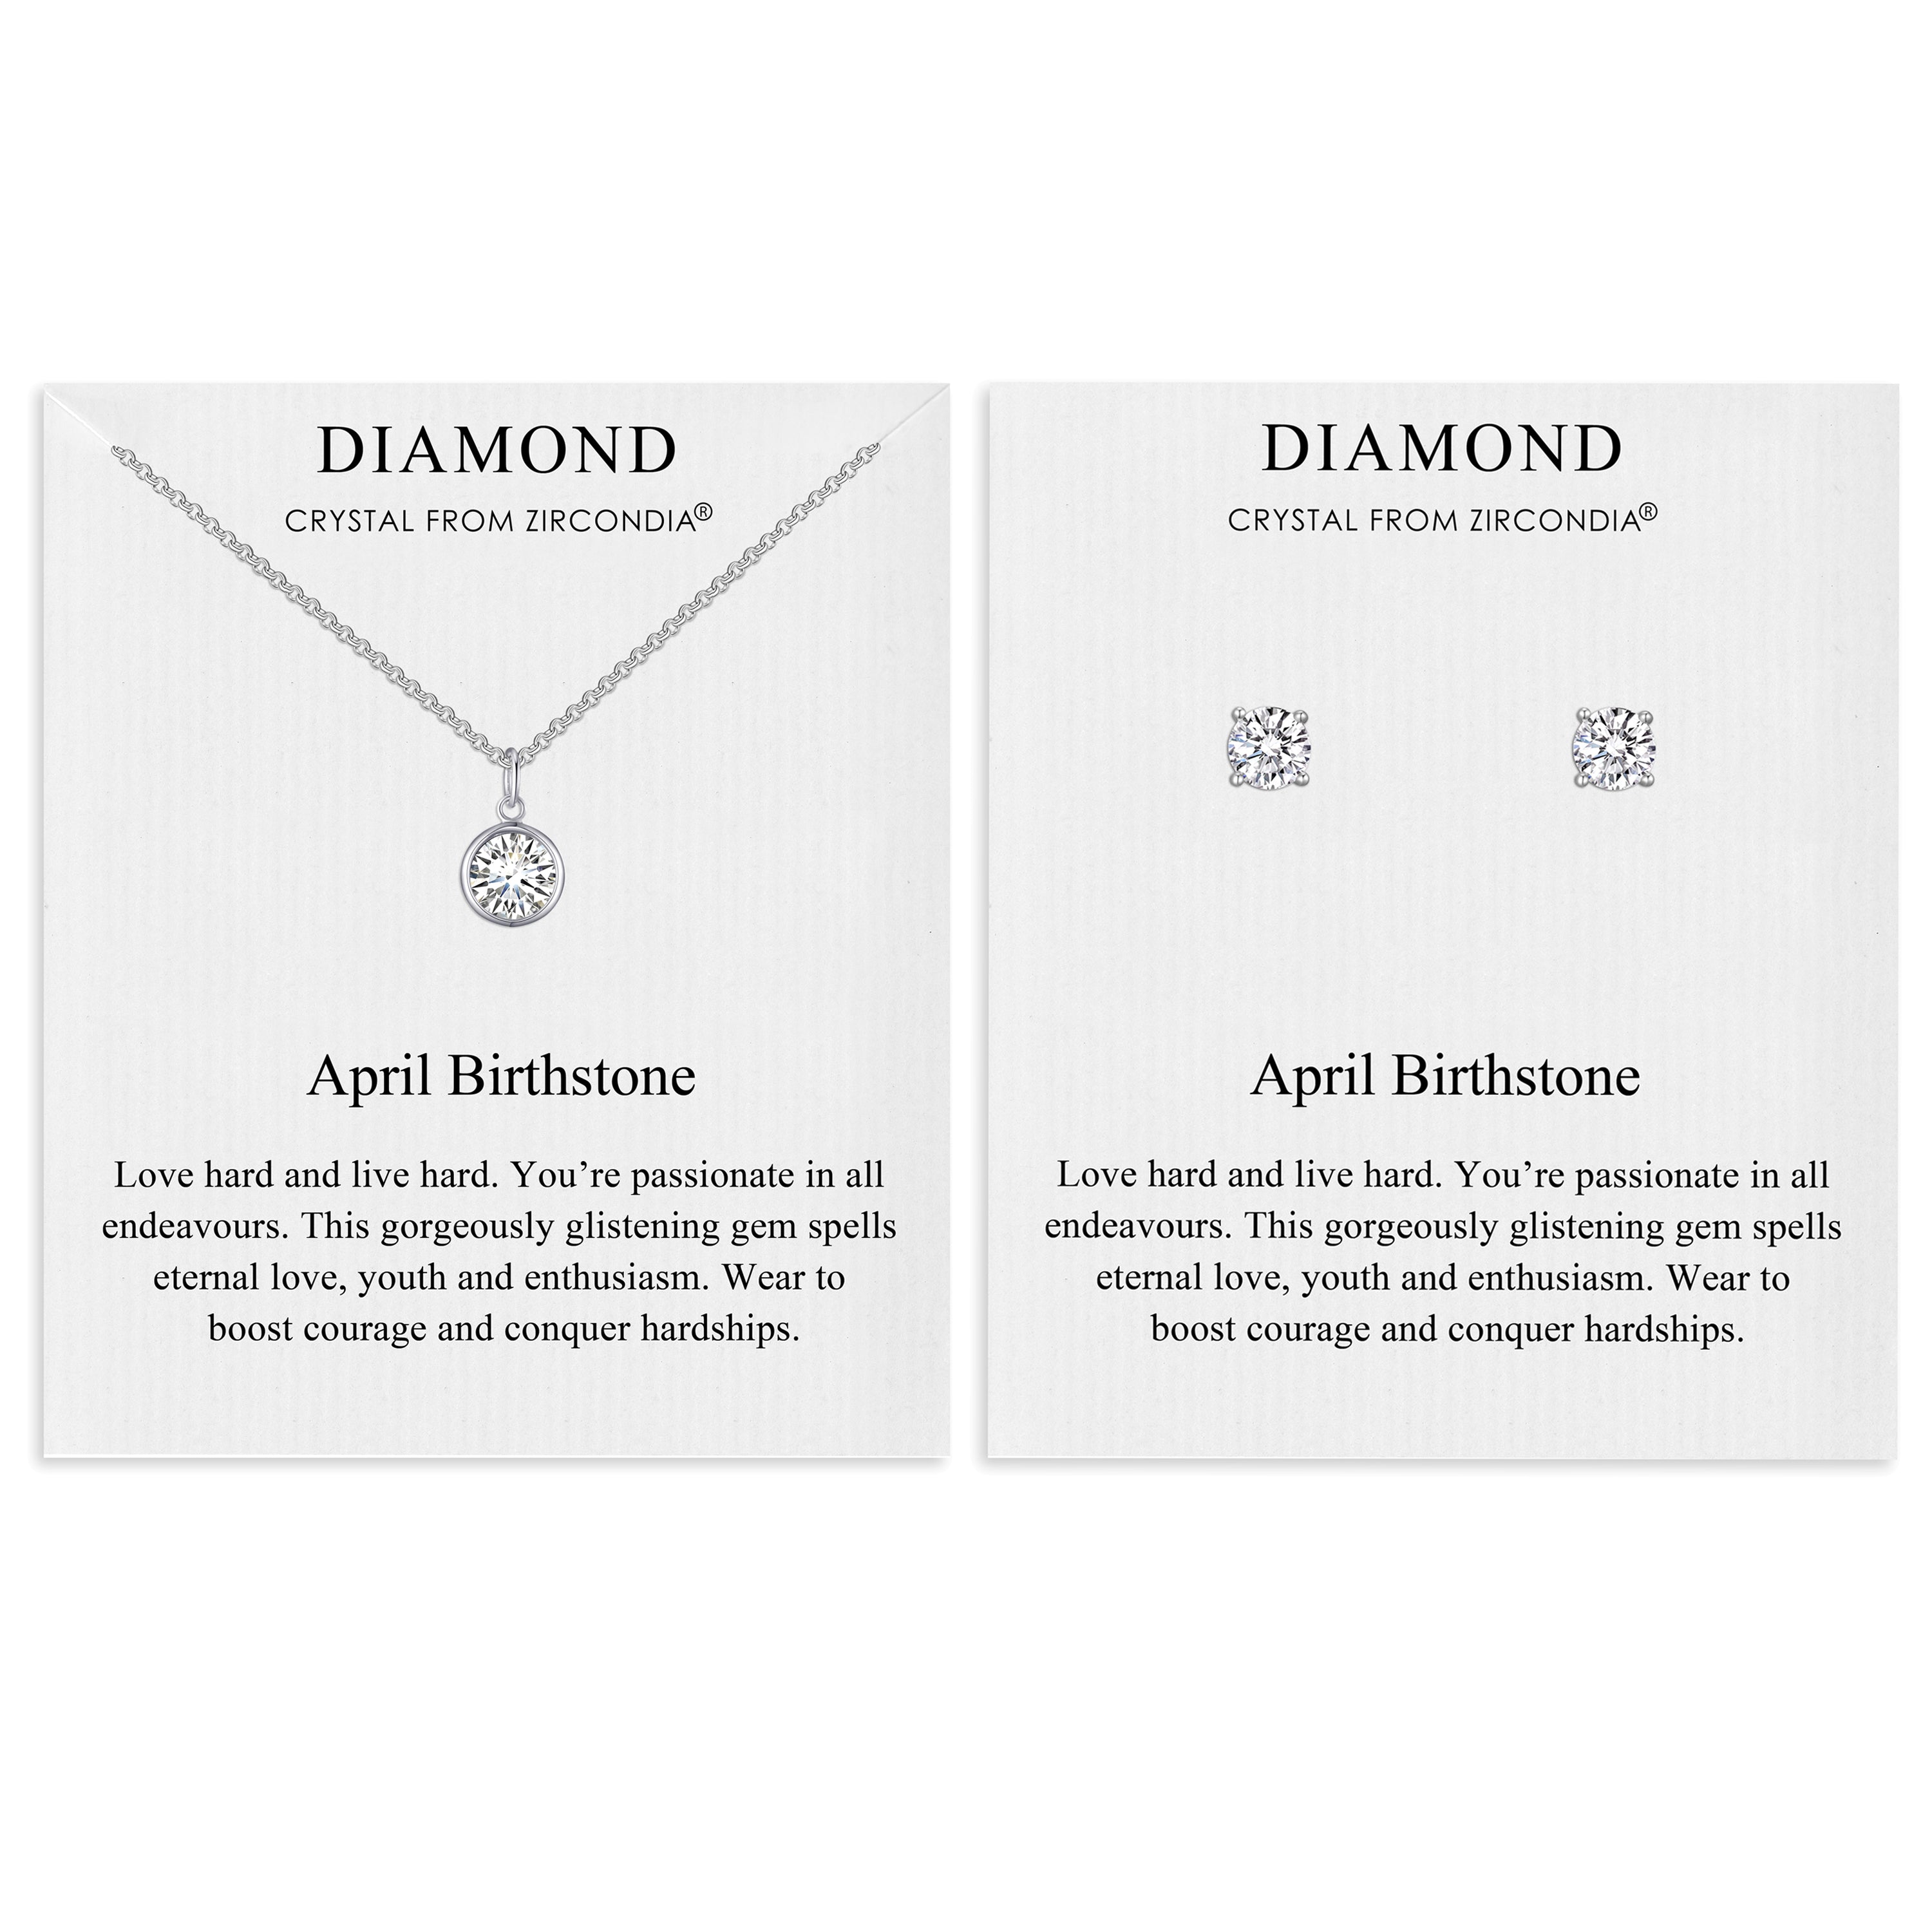 April (Diamond) Birthstone Necklace & Earrings Set Created with Zircondia® Crystals by Philip Jones Jewellery